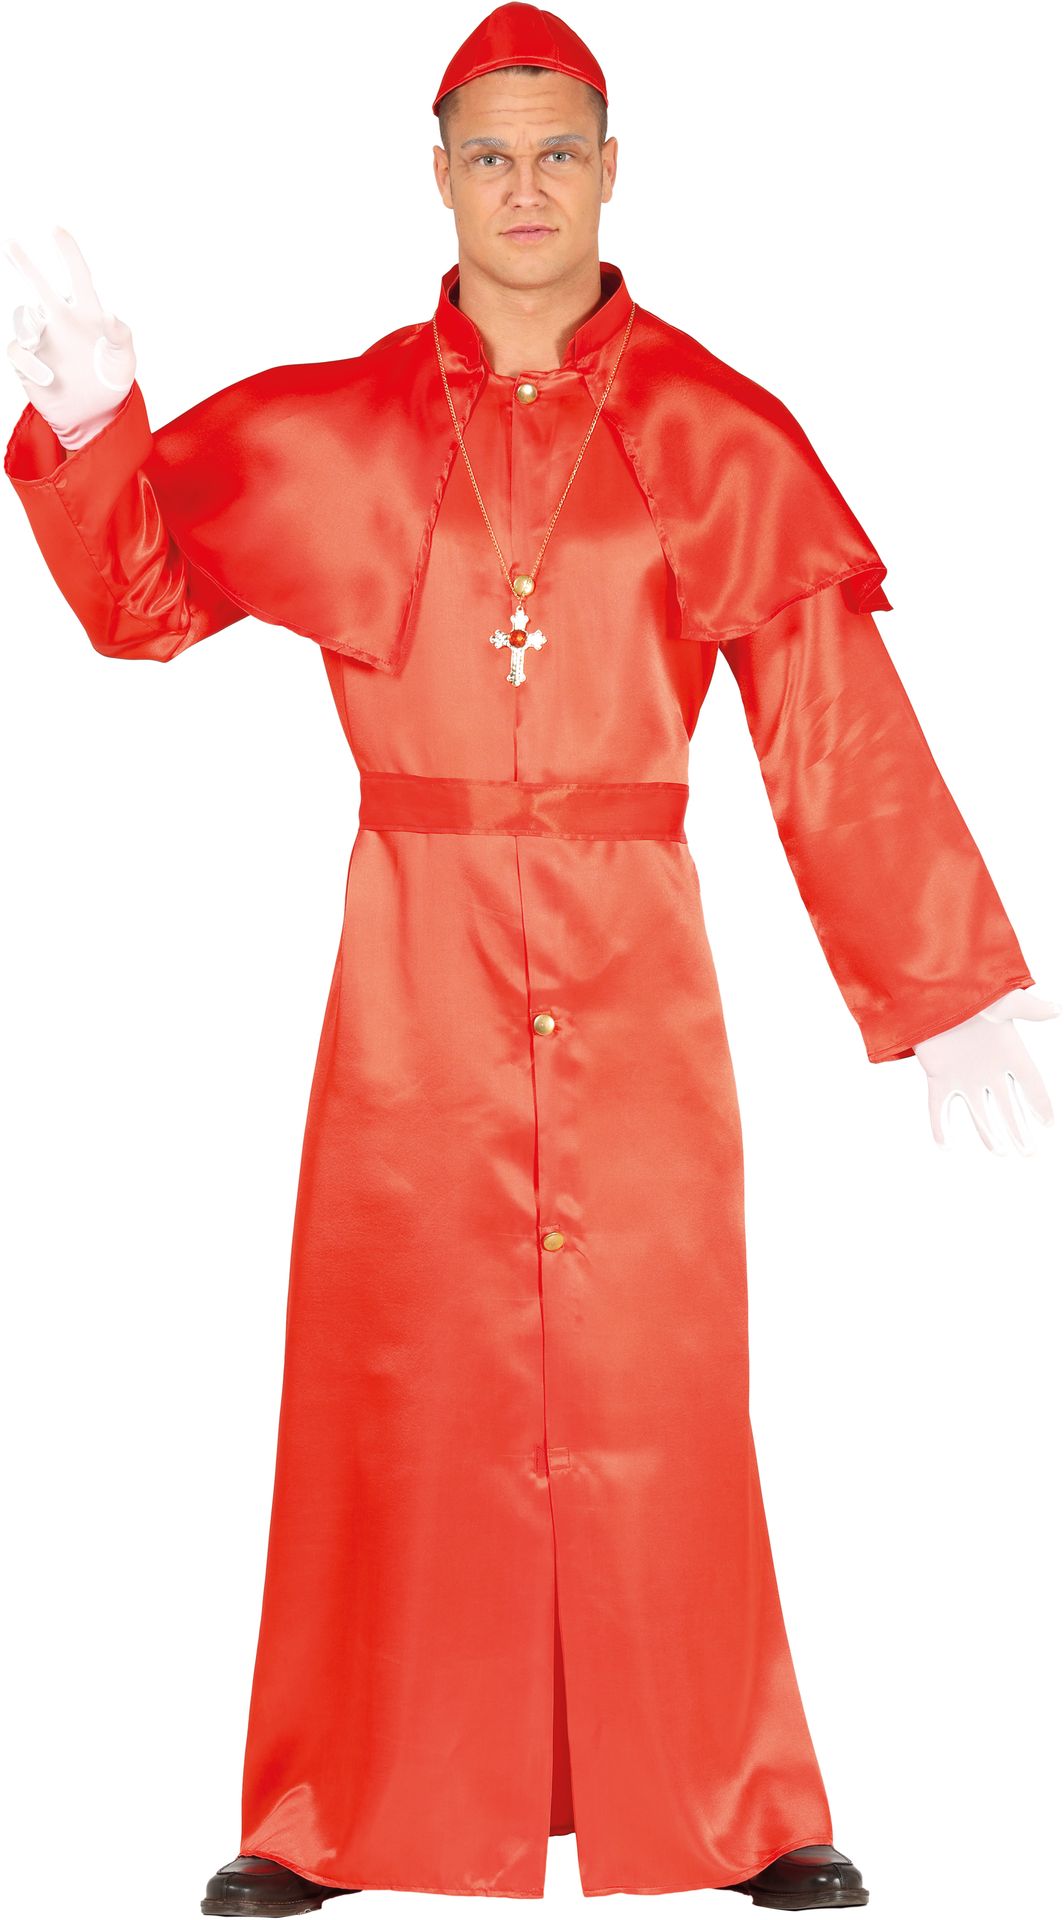 Kardinaal outfit